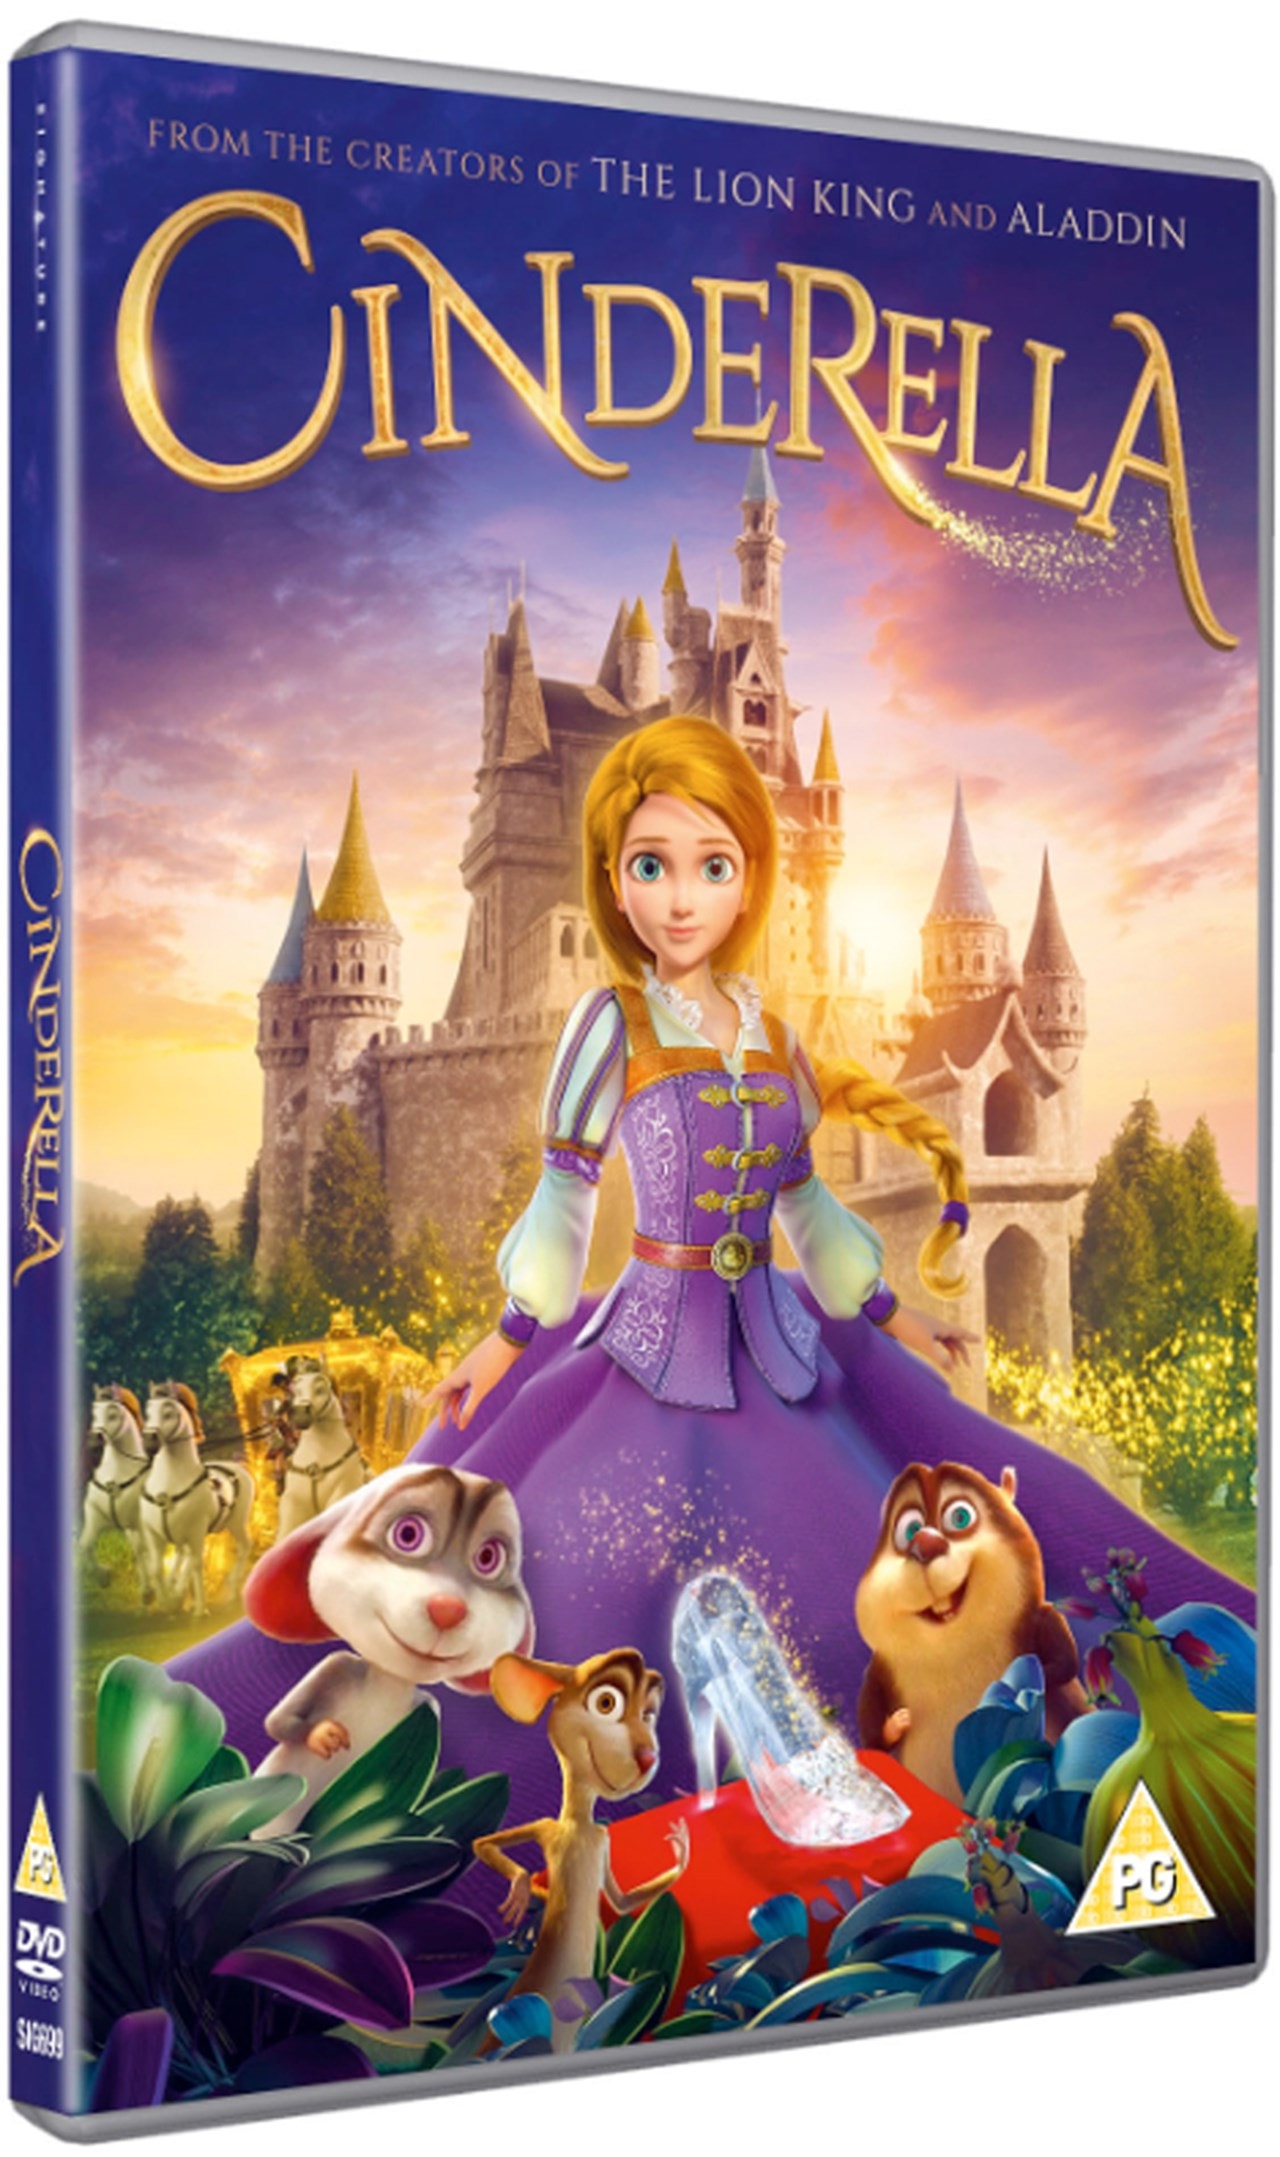 Cinderella | DVD | Free shipping over £20 | HMV Store